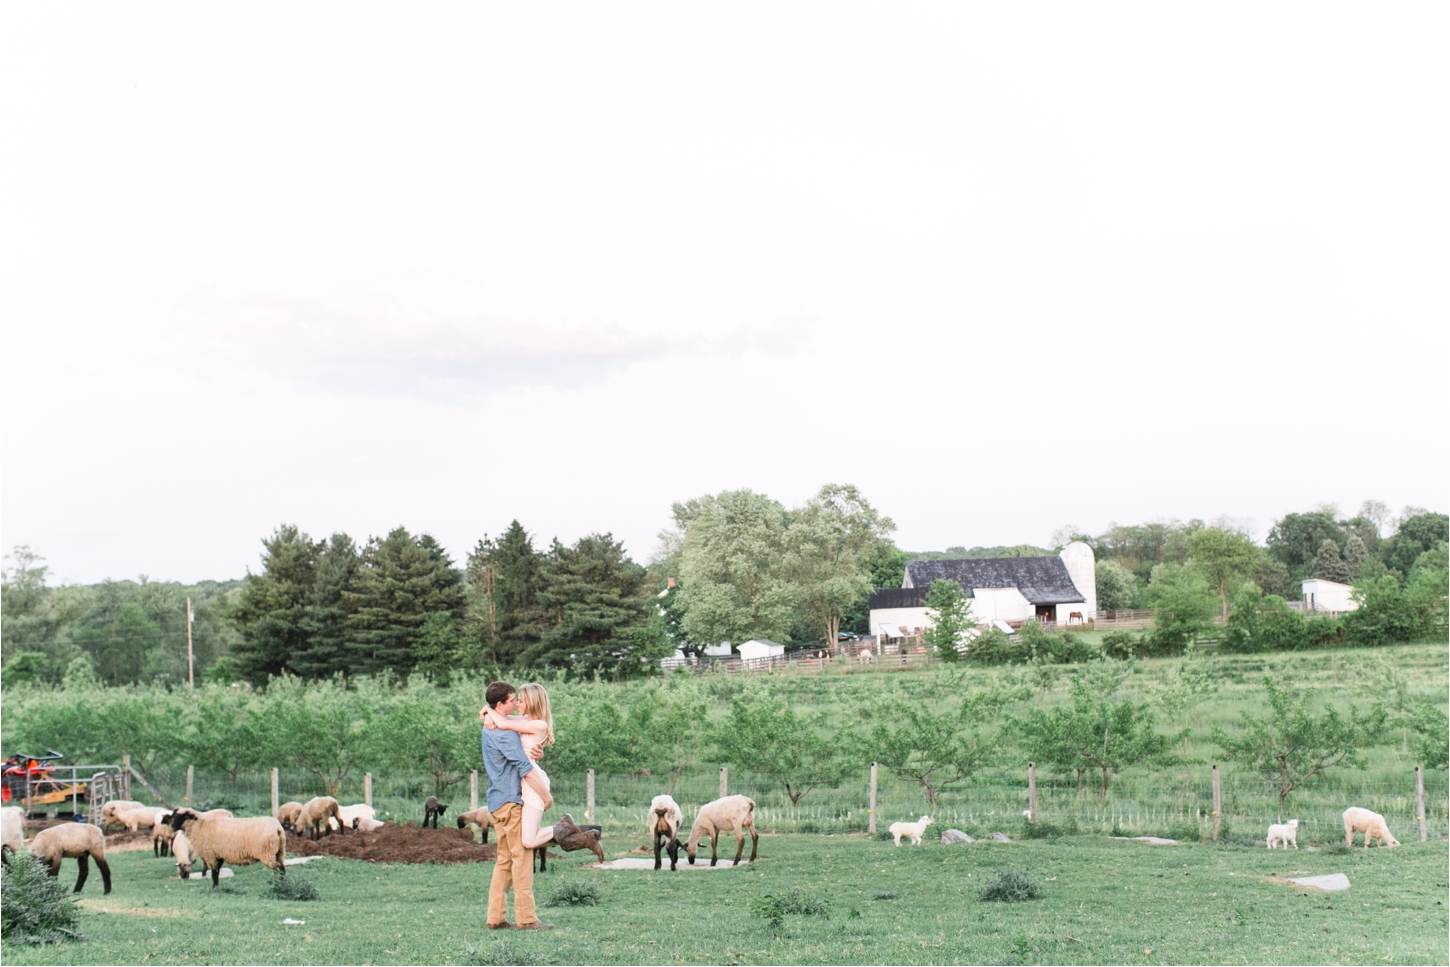 Sheep Farm Engagement Session Inspiration by Pennsylvania Wedding Photographer Brianna Wilbur